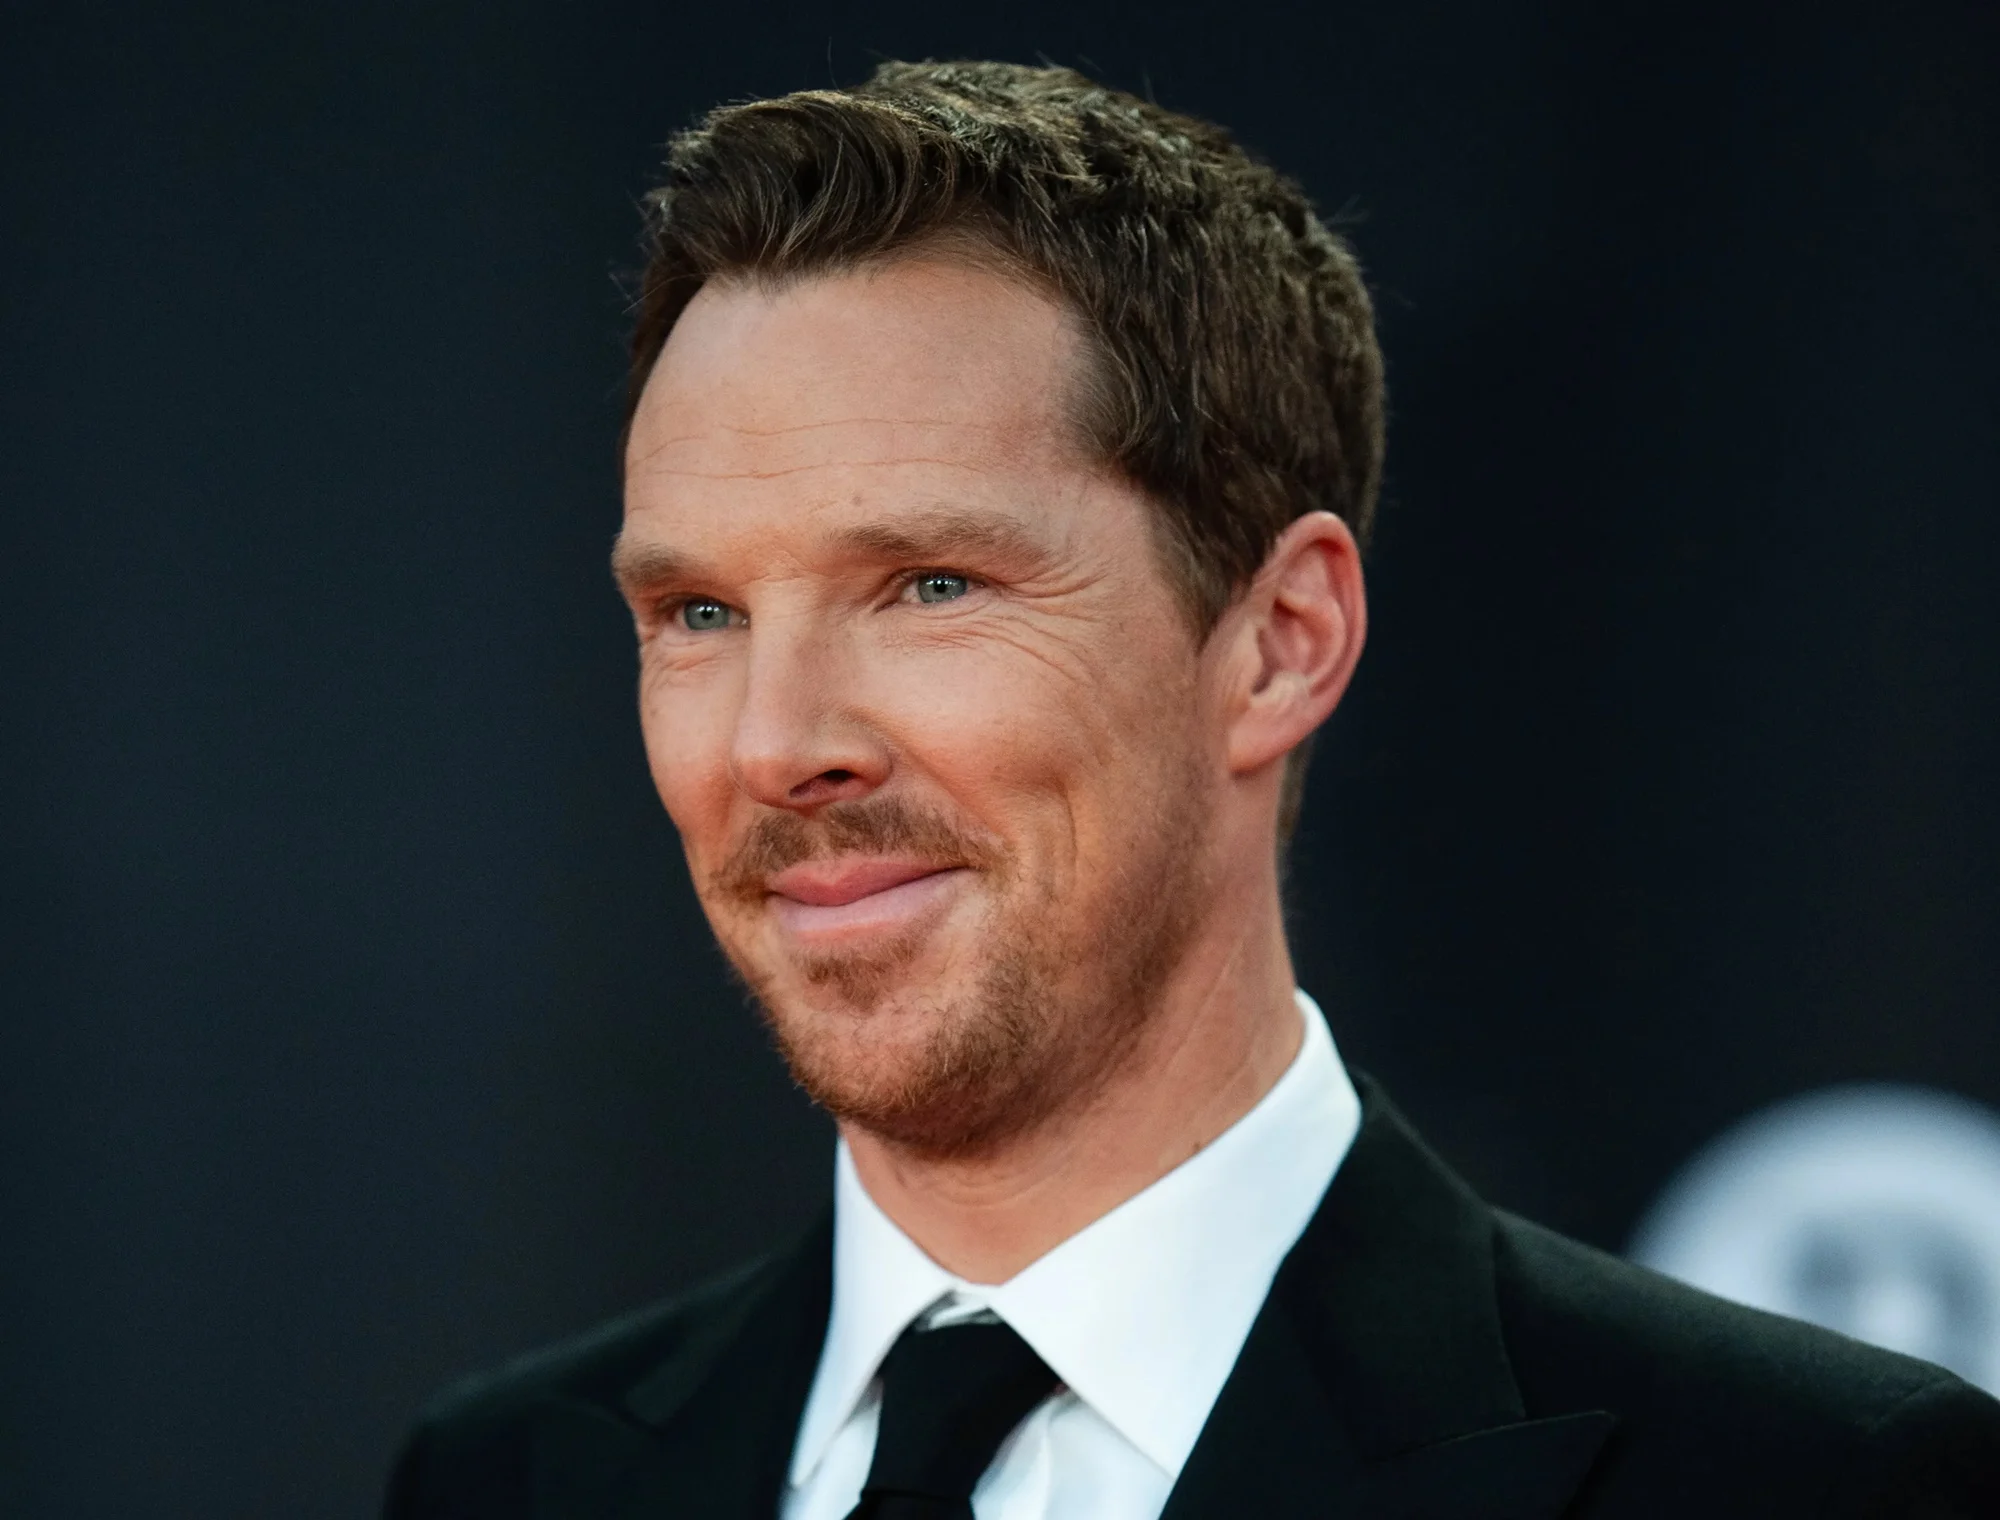 Benedict Cumberbatch protagonizará "Eric", una nueva serie para Netflix